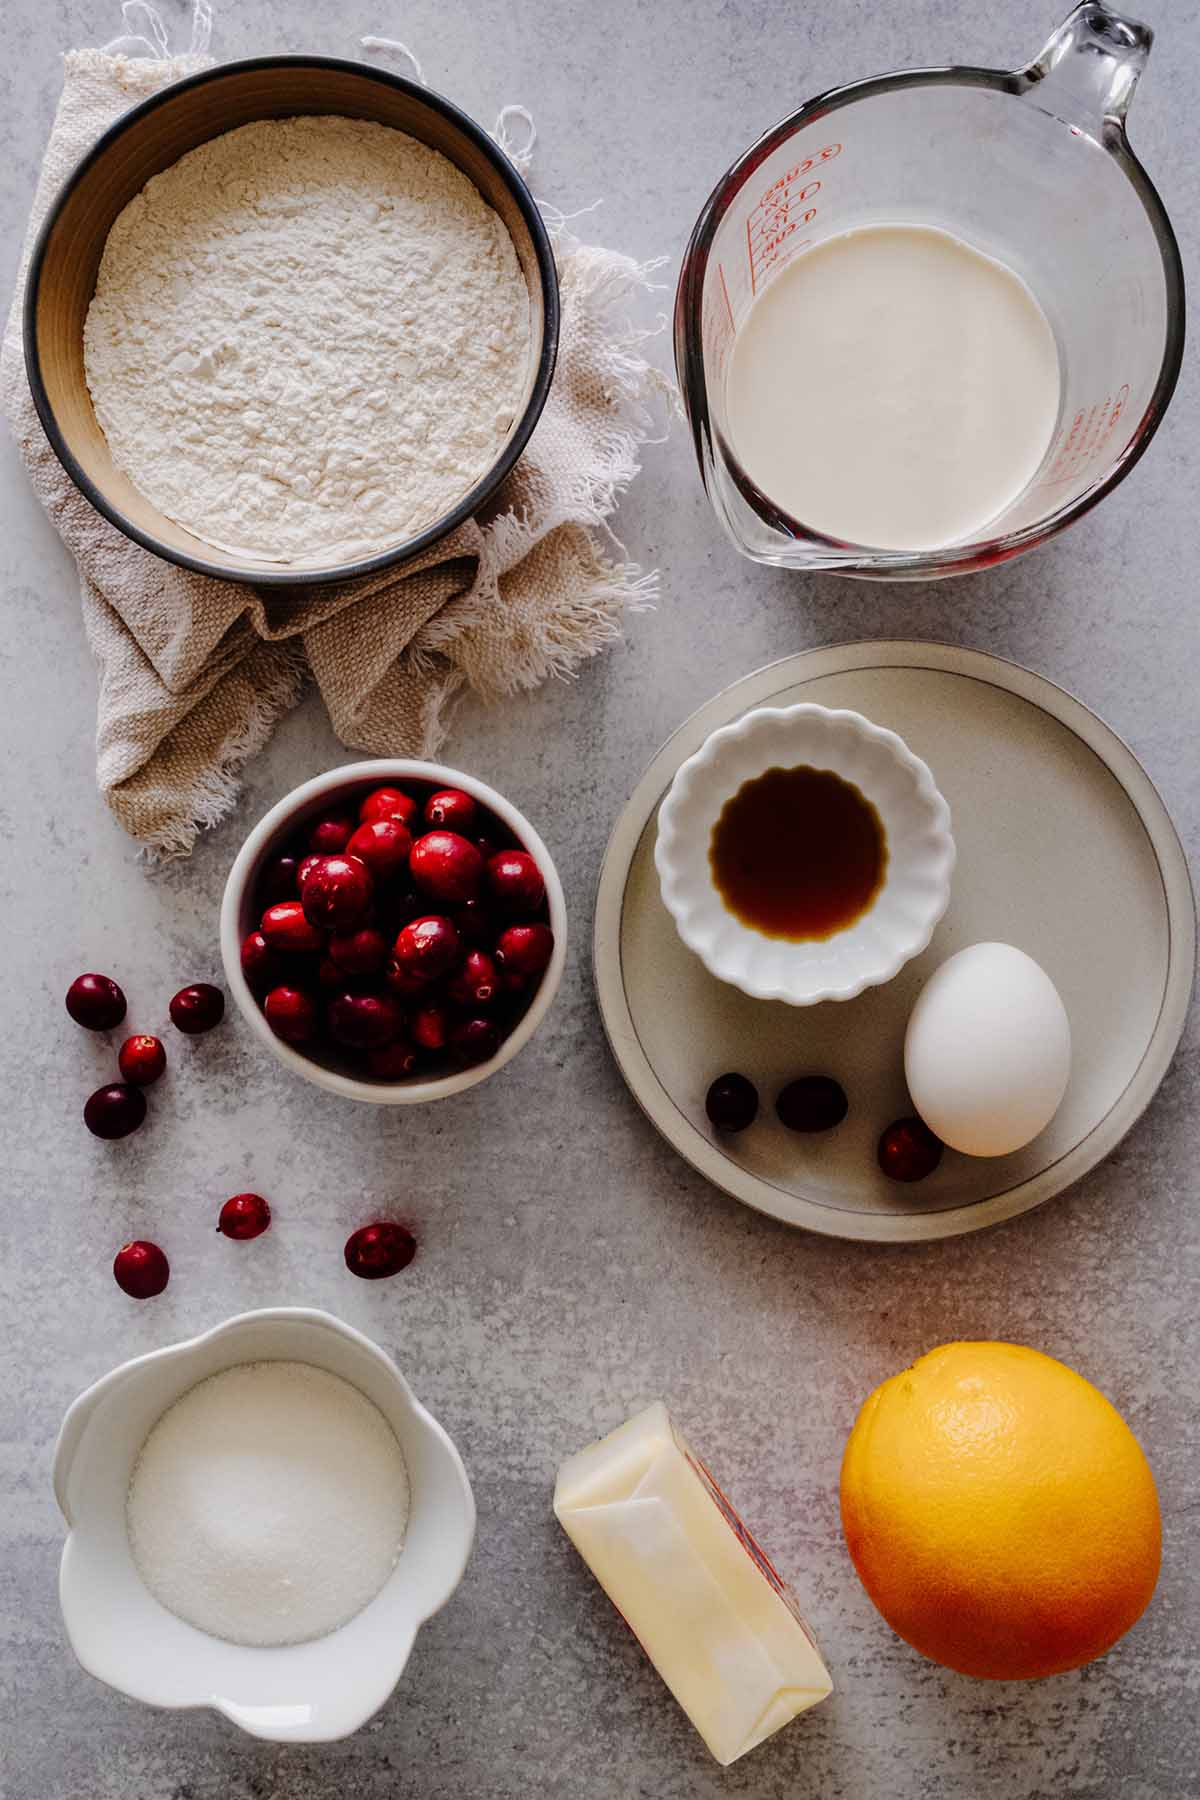 Ingredients for orange blueberry scones